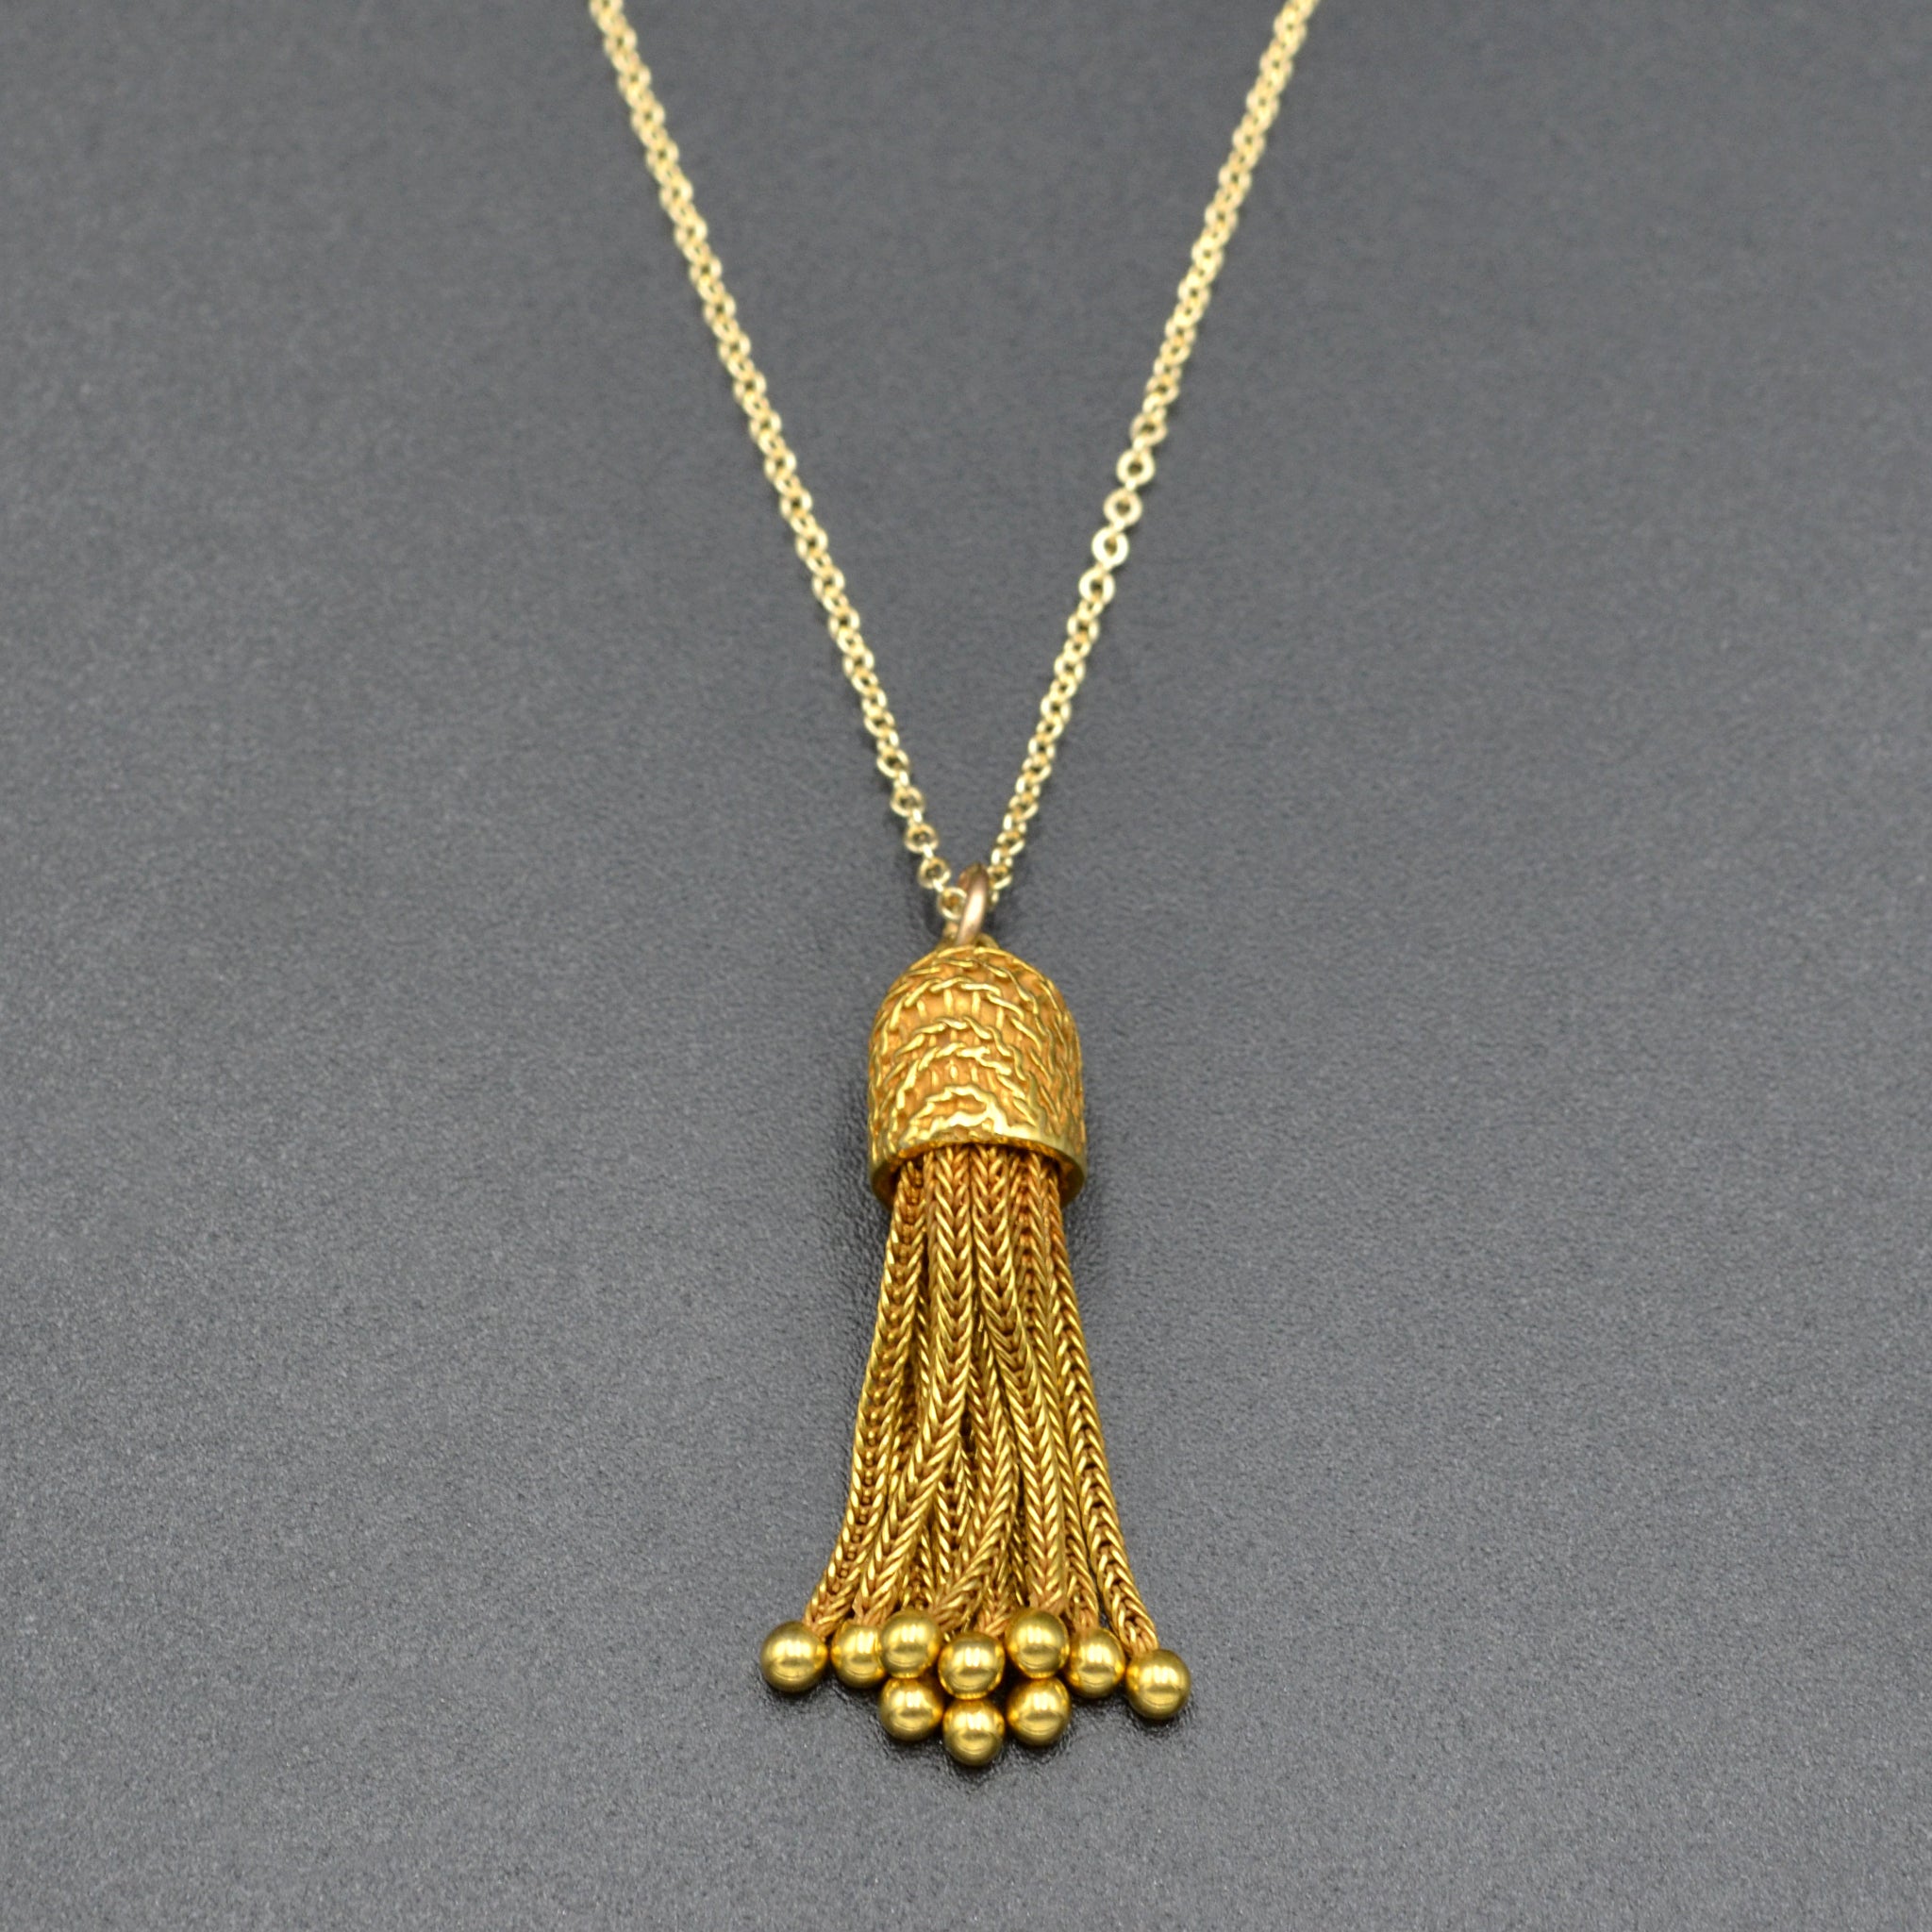 Vintage Monet Gold Tone Rope/ Tassel Necklace 24 Inch | eBay